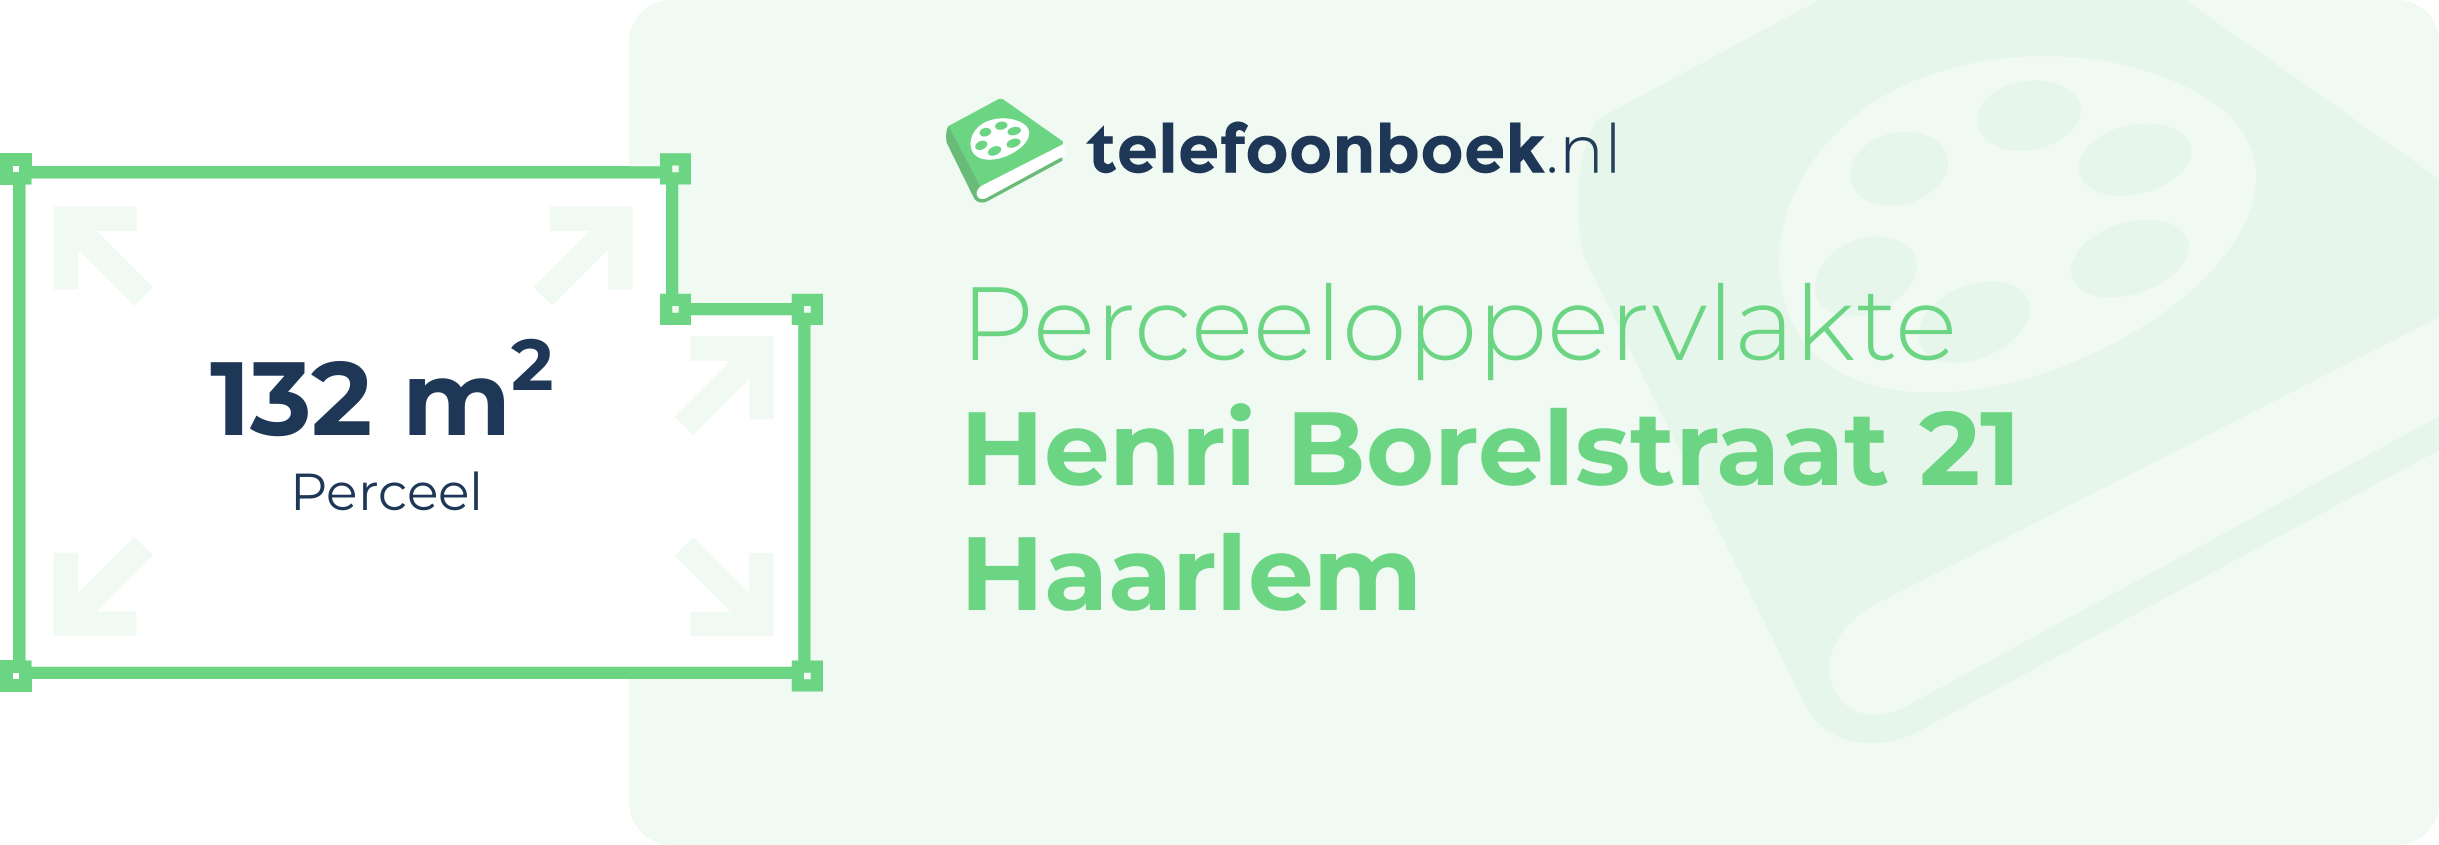 Perceeloppervlakte Henri Borelstraat 21 Haarlem